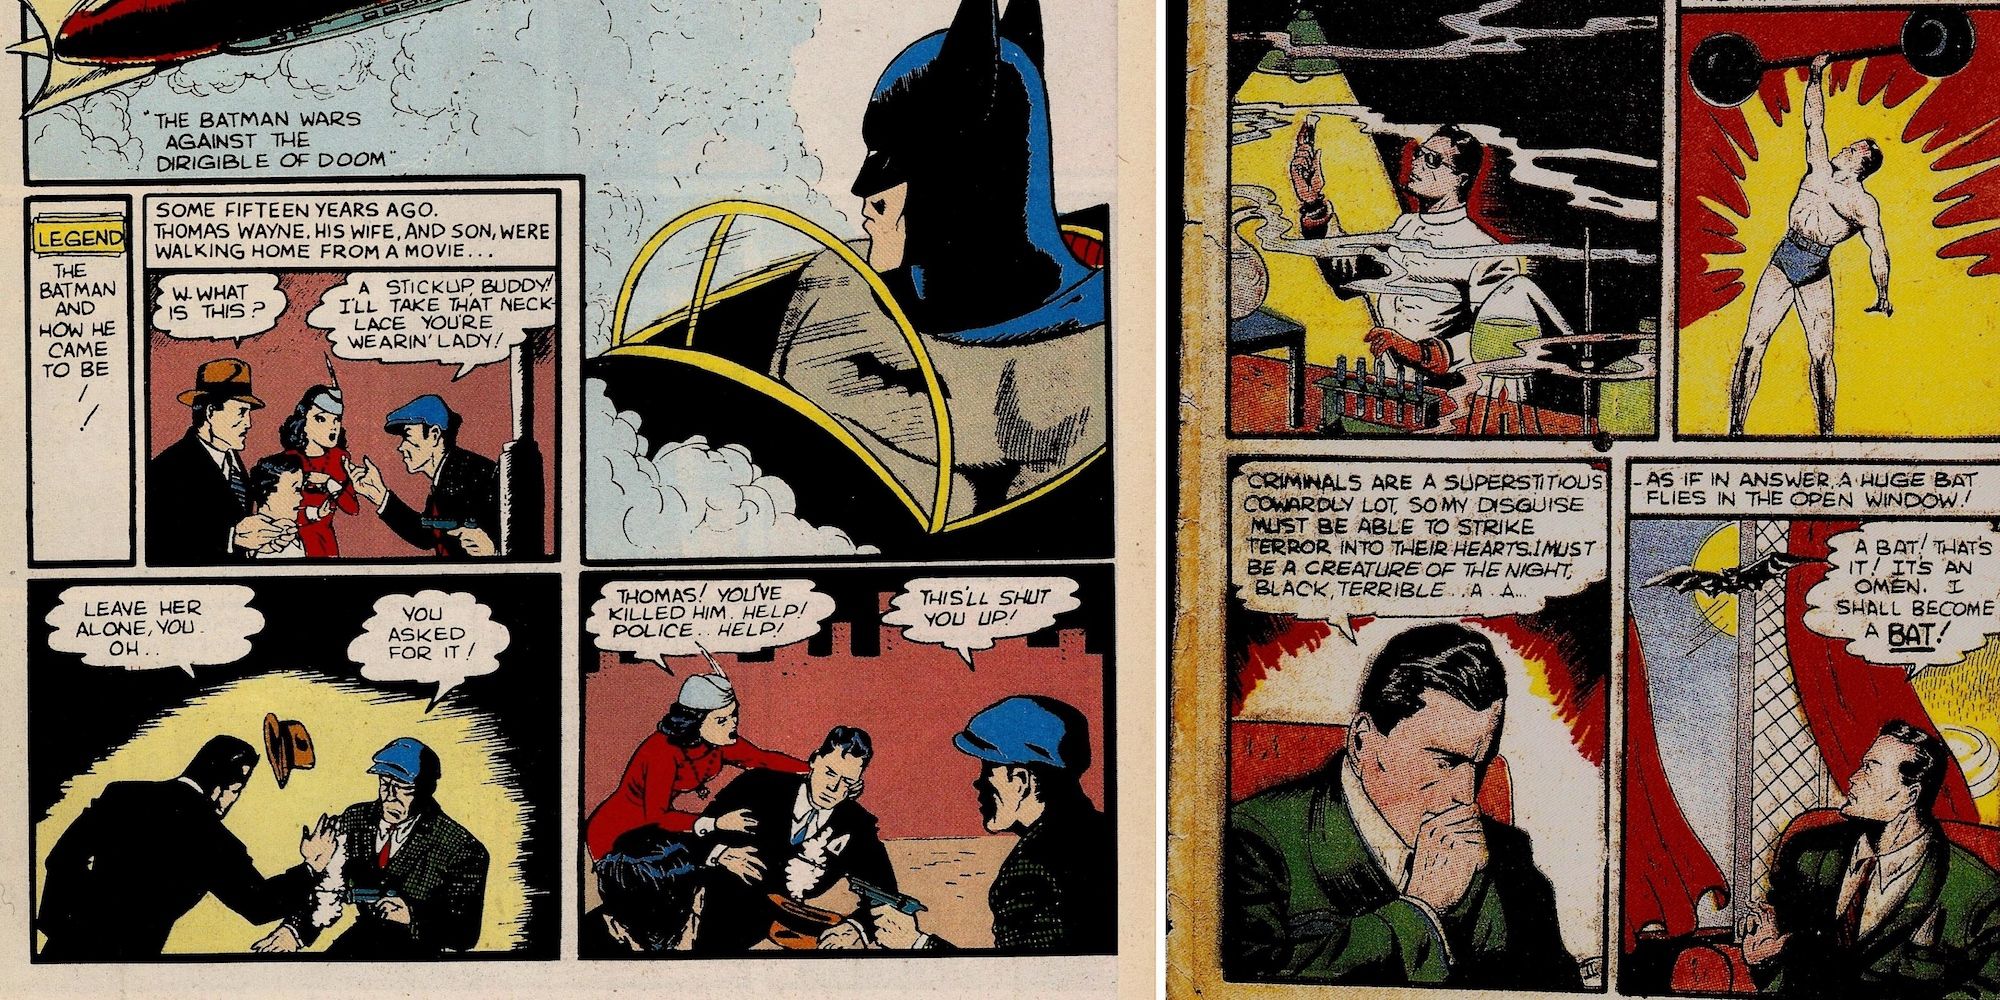 Batman's origin story in DC Comics